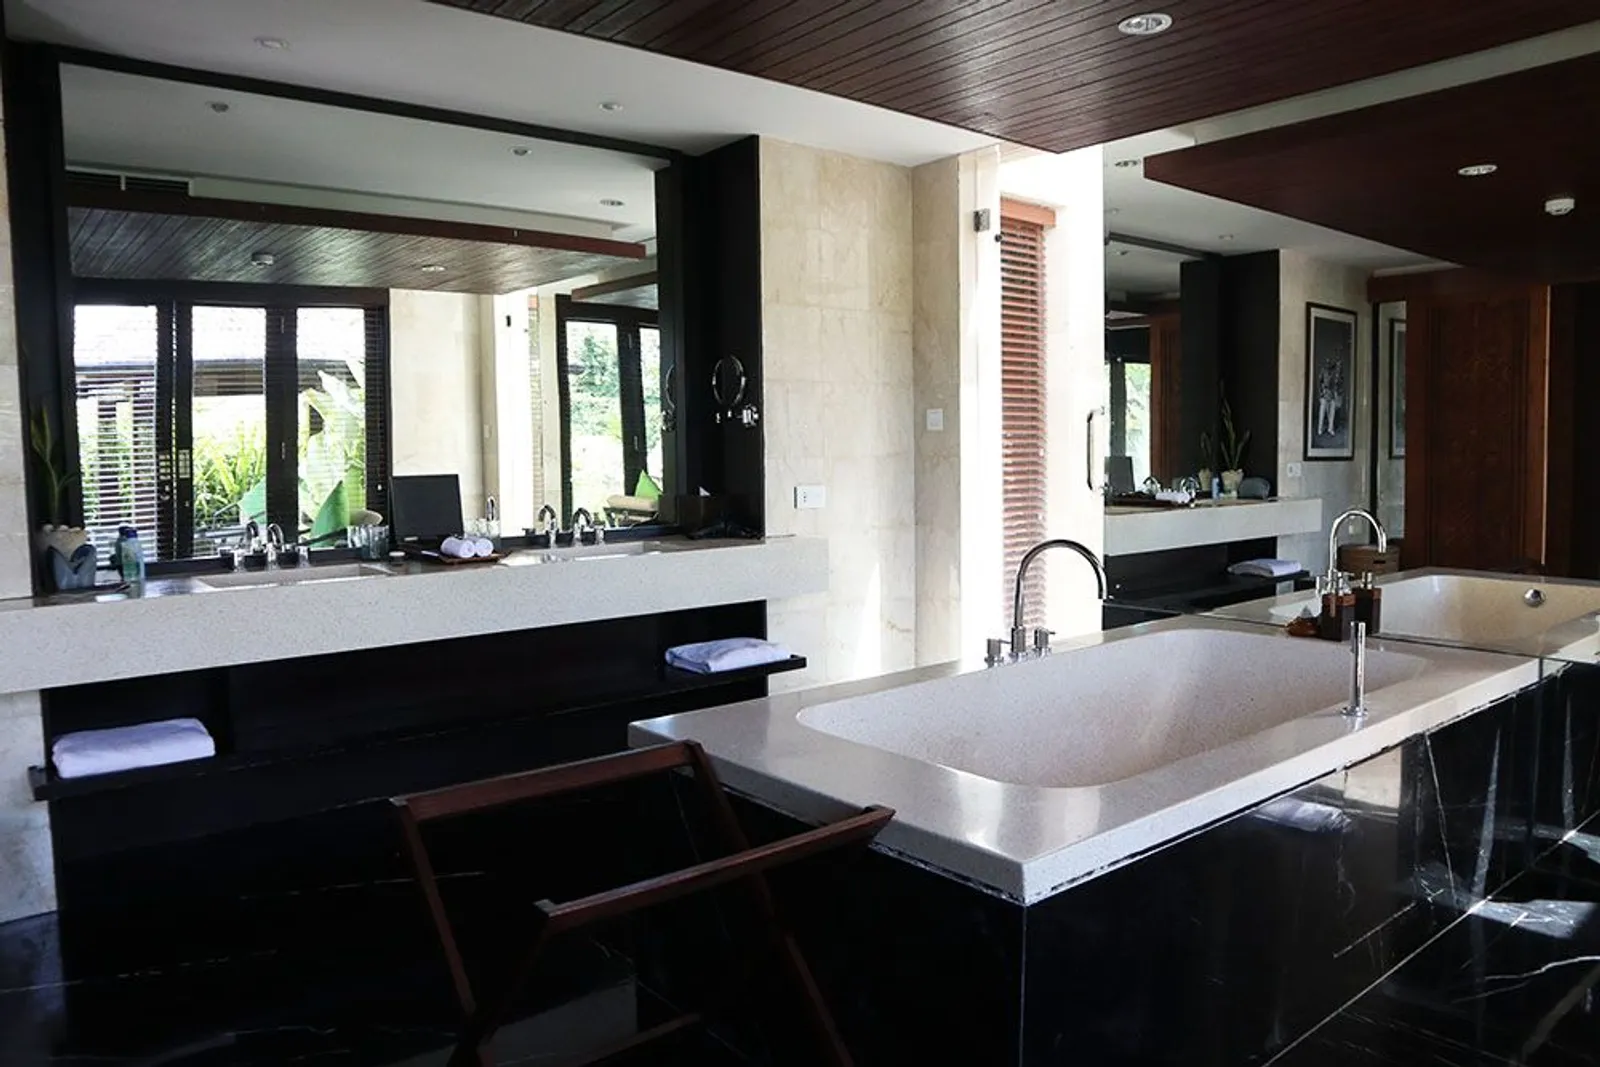 Review: The Sanctoo Villas & Spa, Destinasi Bulan Madu Komplet di Bali